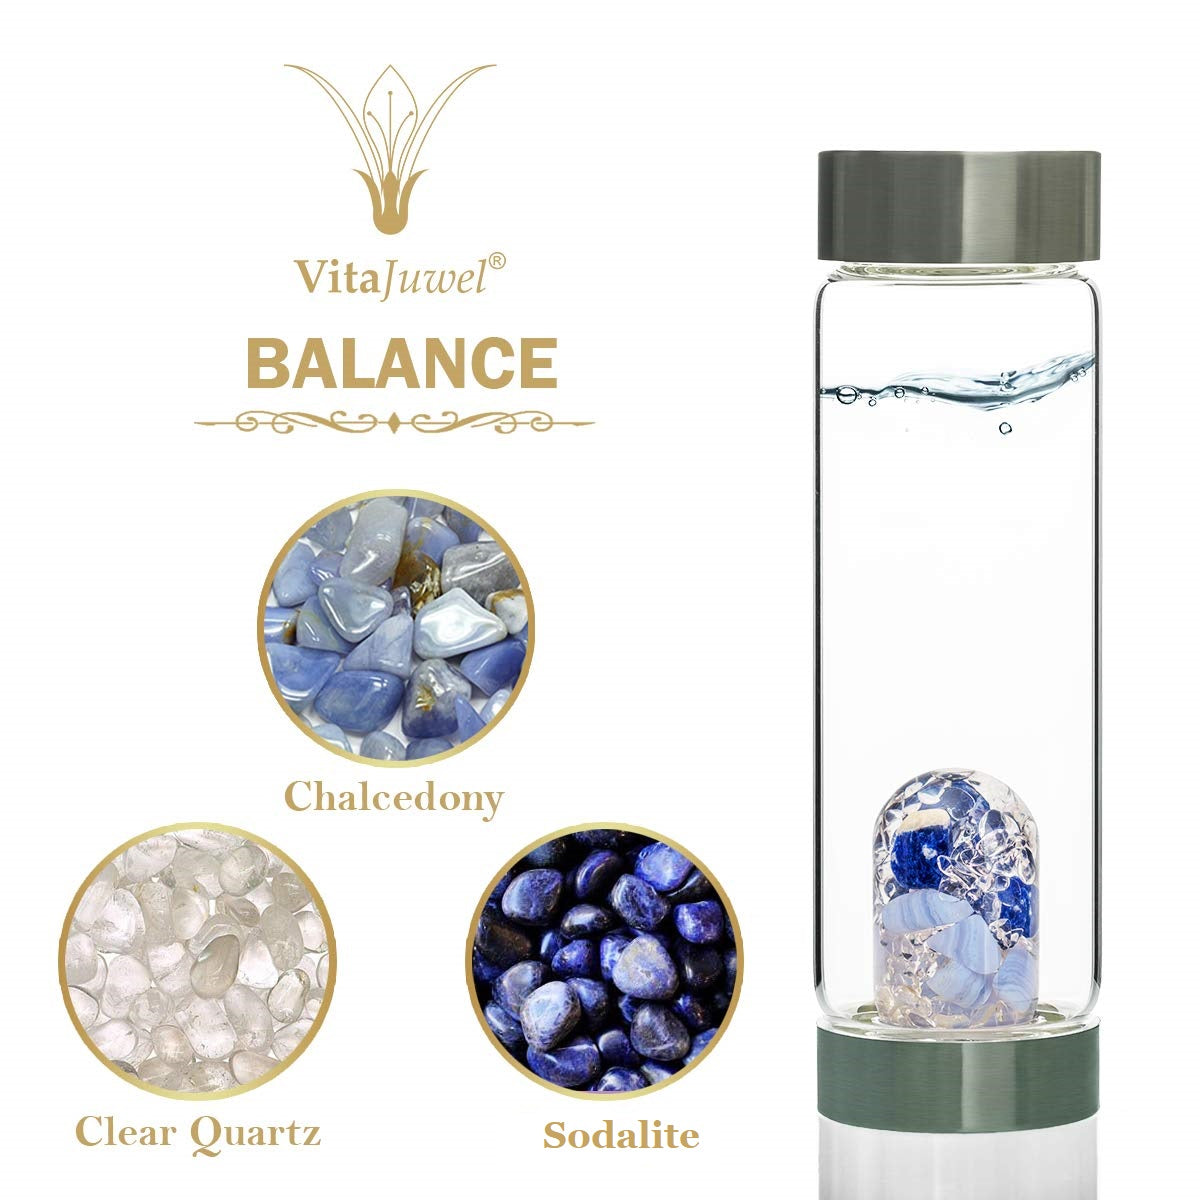 Vitajuwel ViA Gemwater Bottle BALANCE Blend with LOOP Handle Meditation Intuition Wisdom - claritycove.com